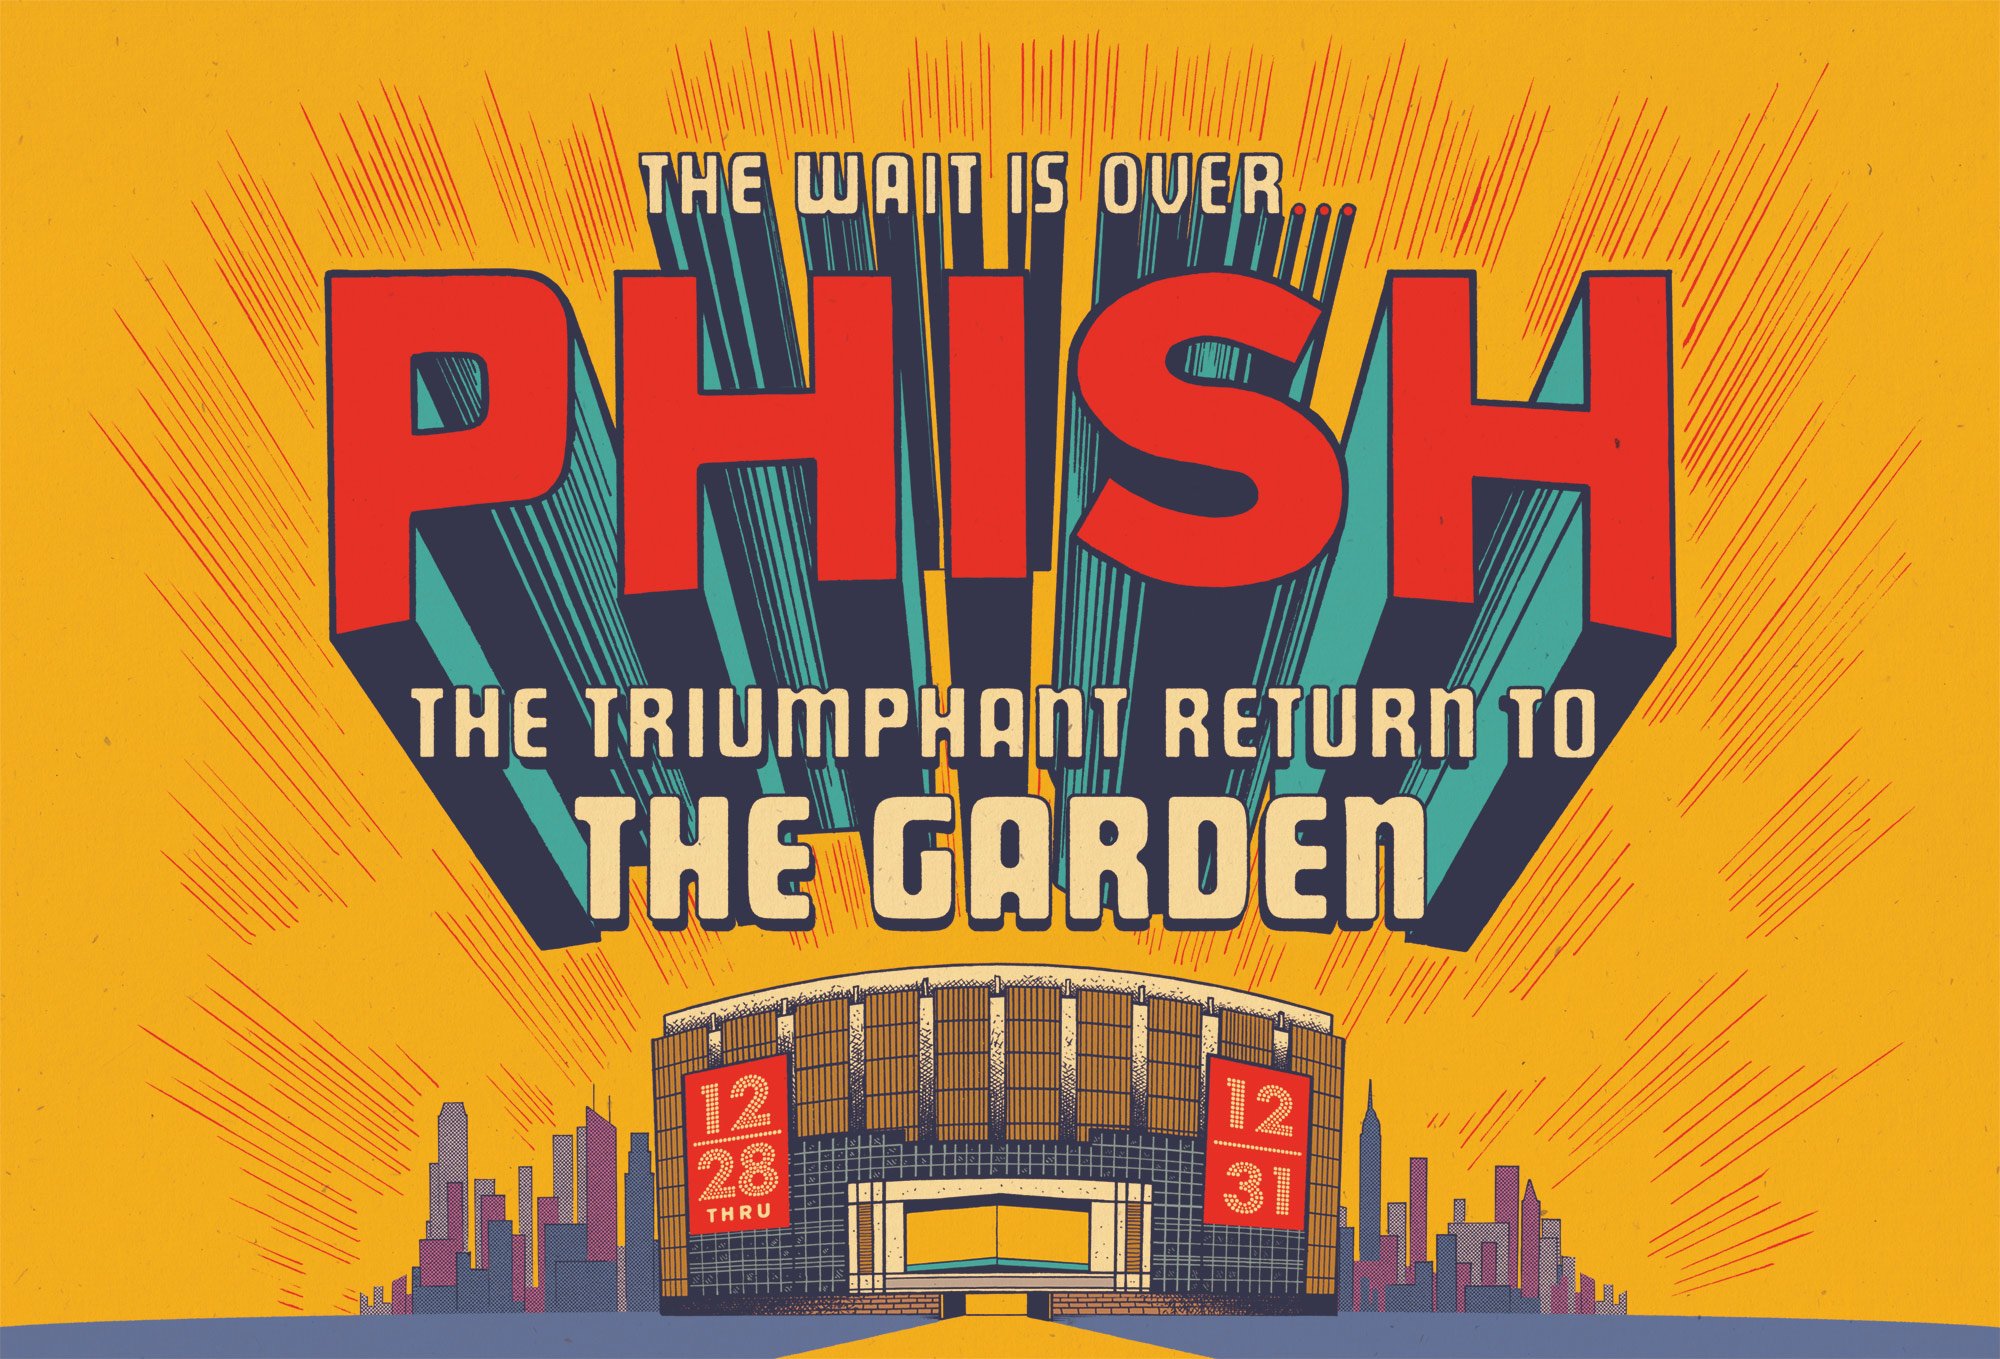 Phish live stream from Madison Square Garden. Photo by: Phish